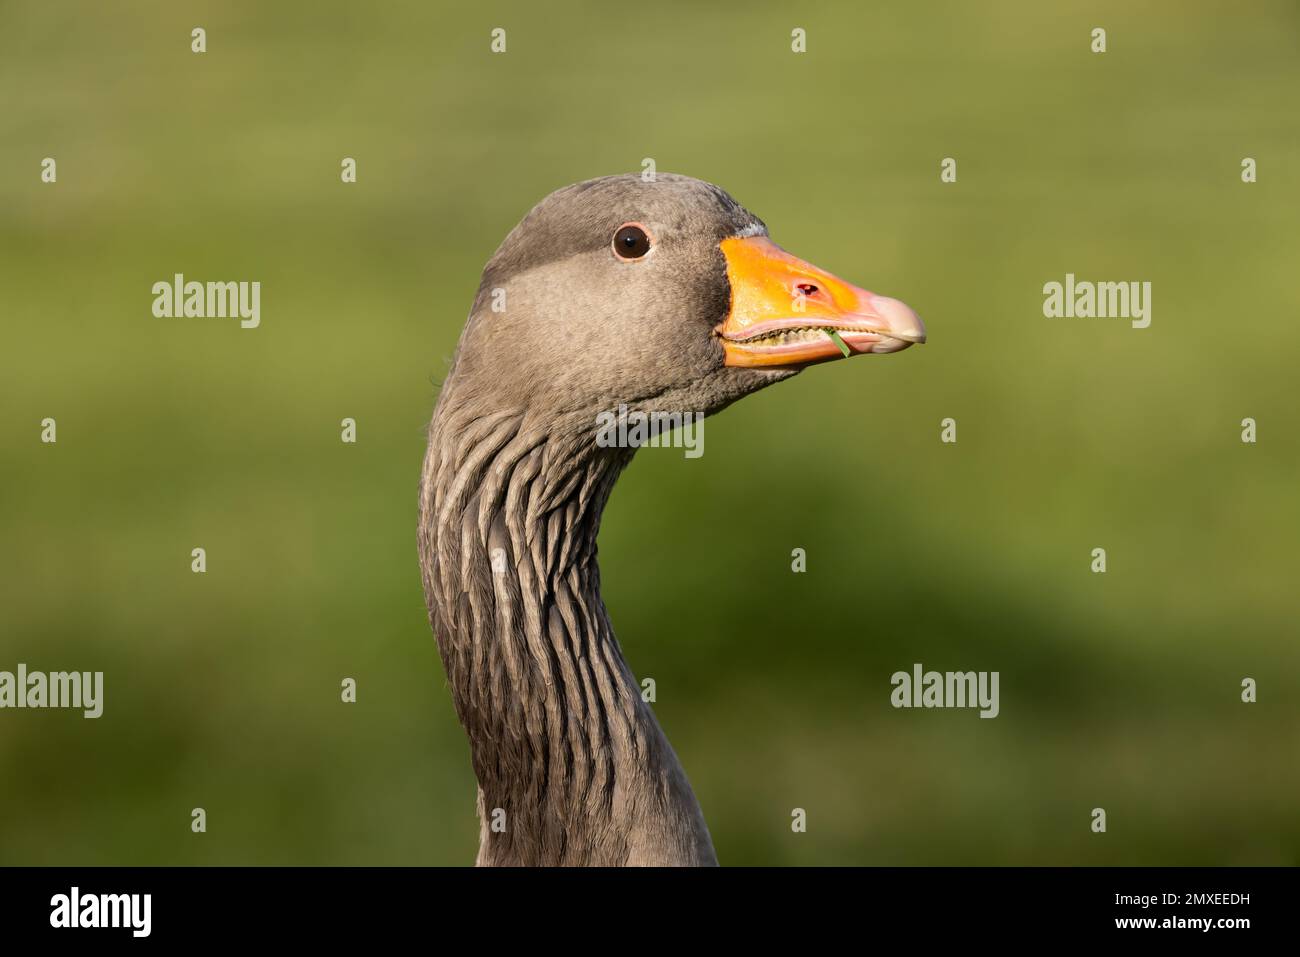 Greylag Goose close-up Stock Photo